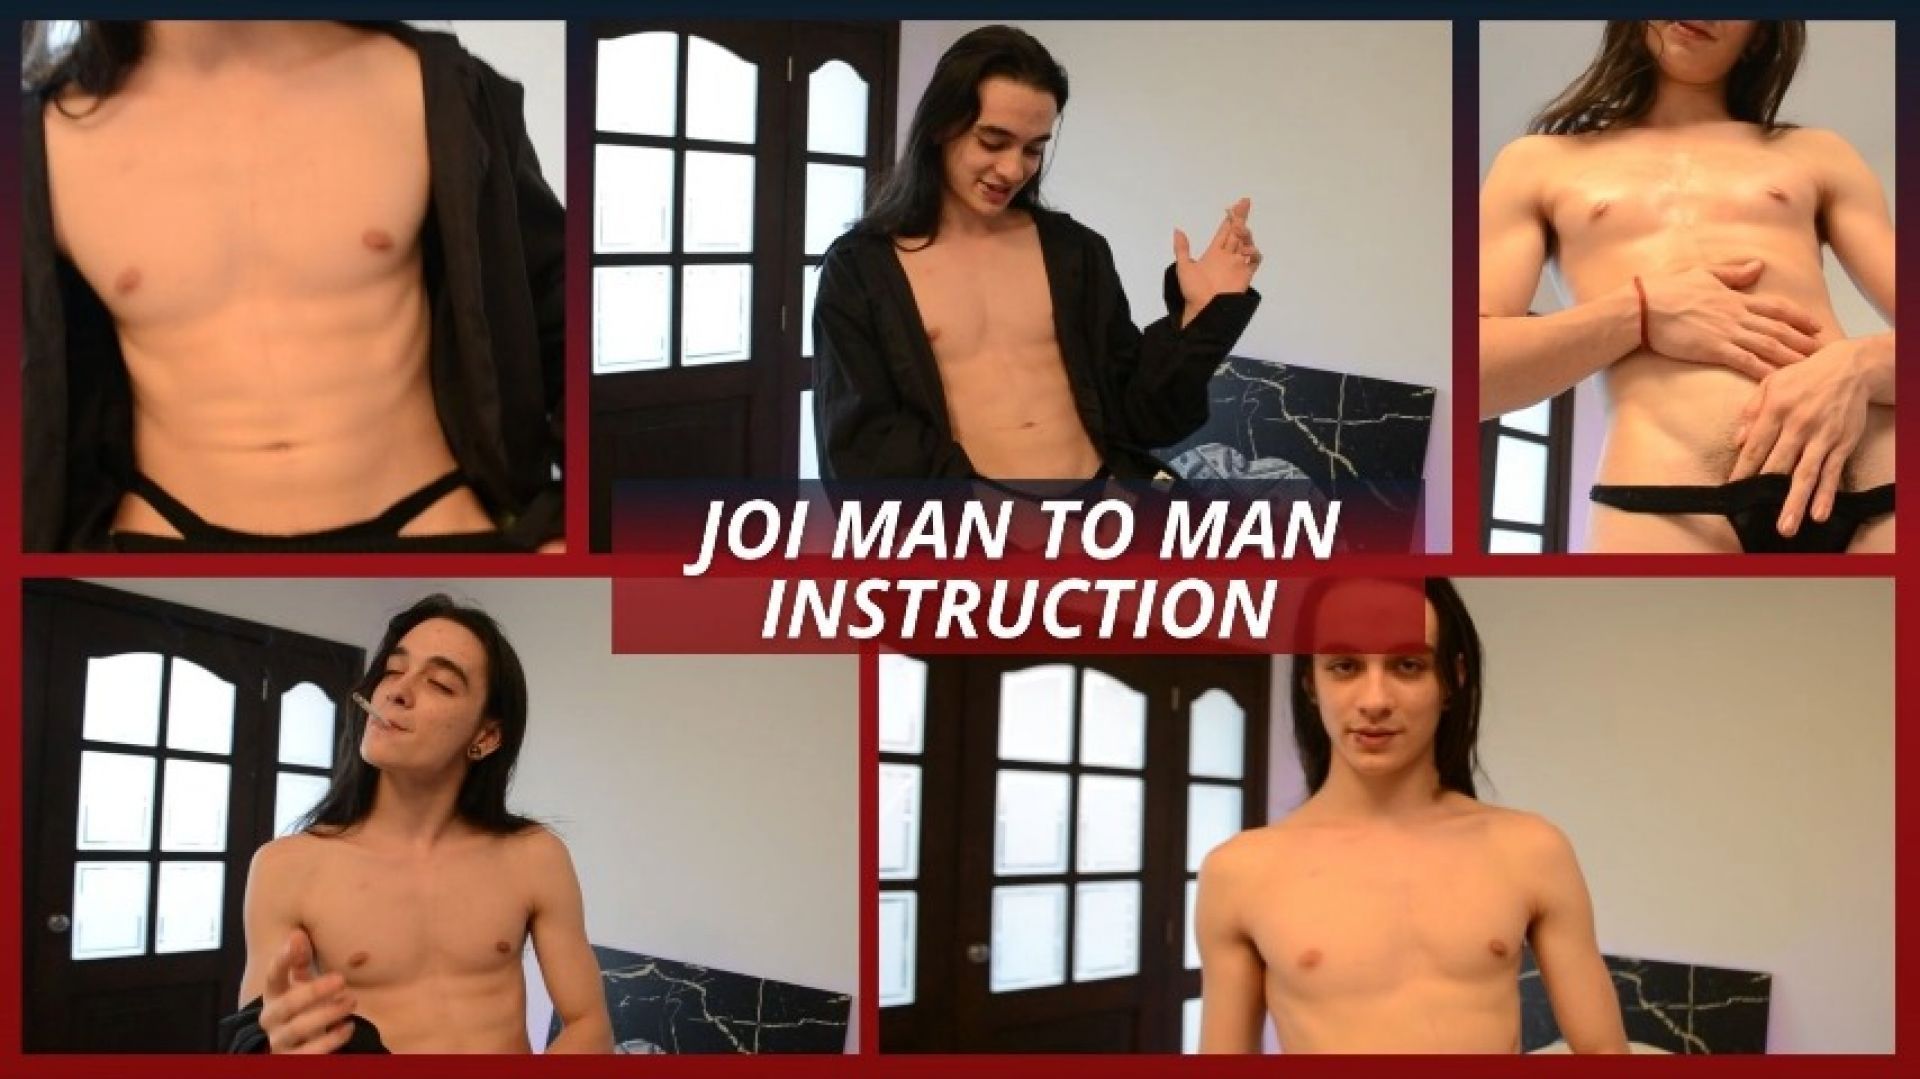 JOI MAN TO MAN INSTRUCTION